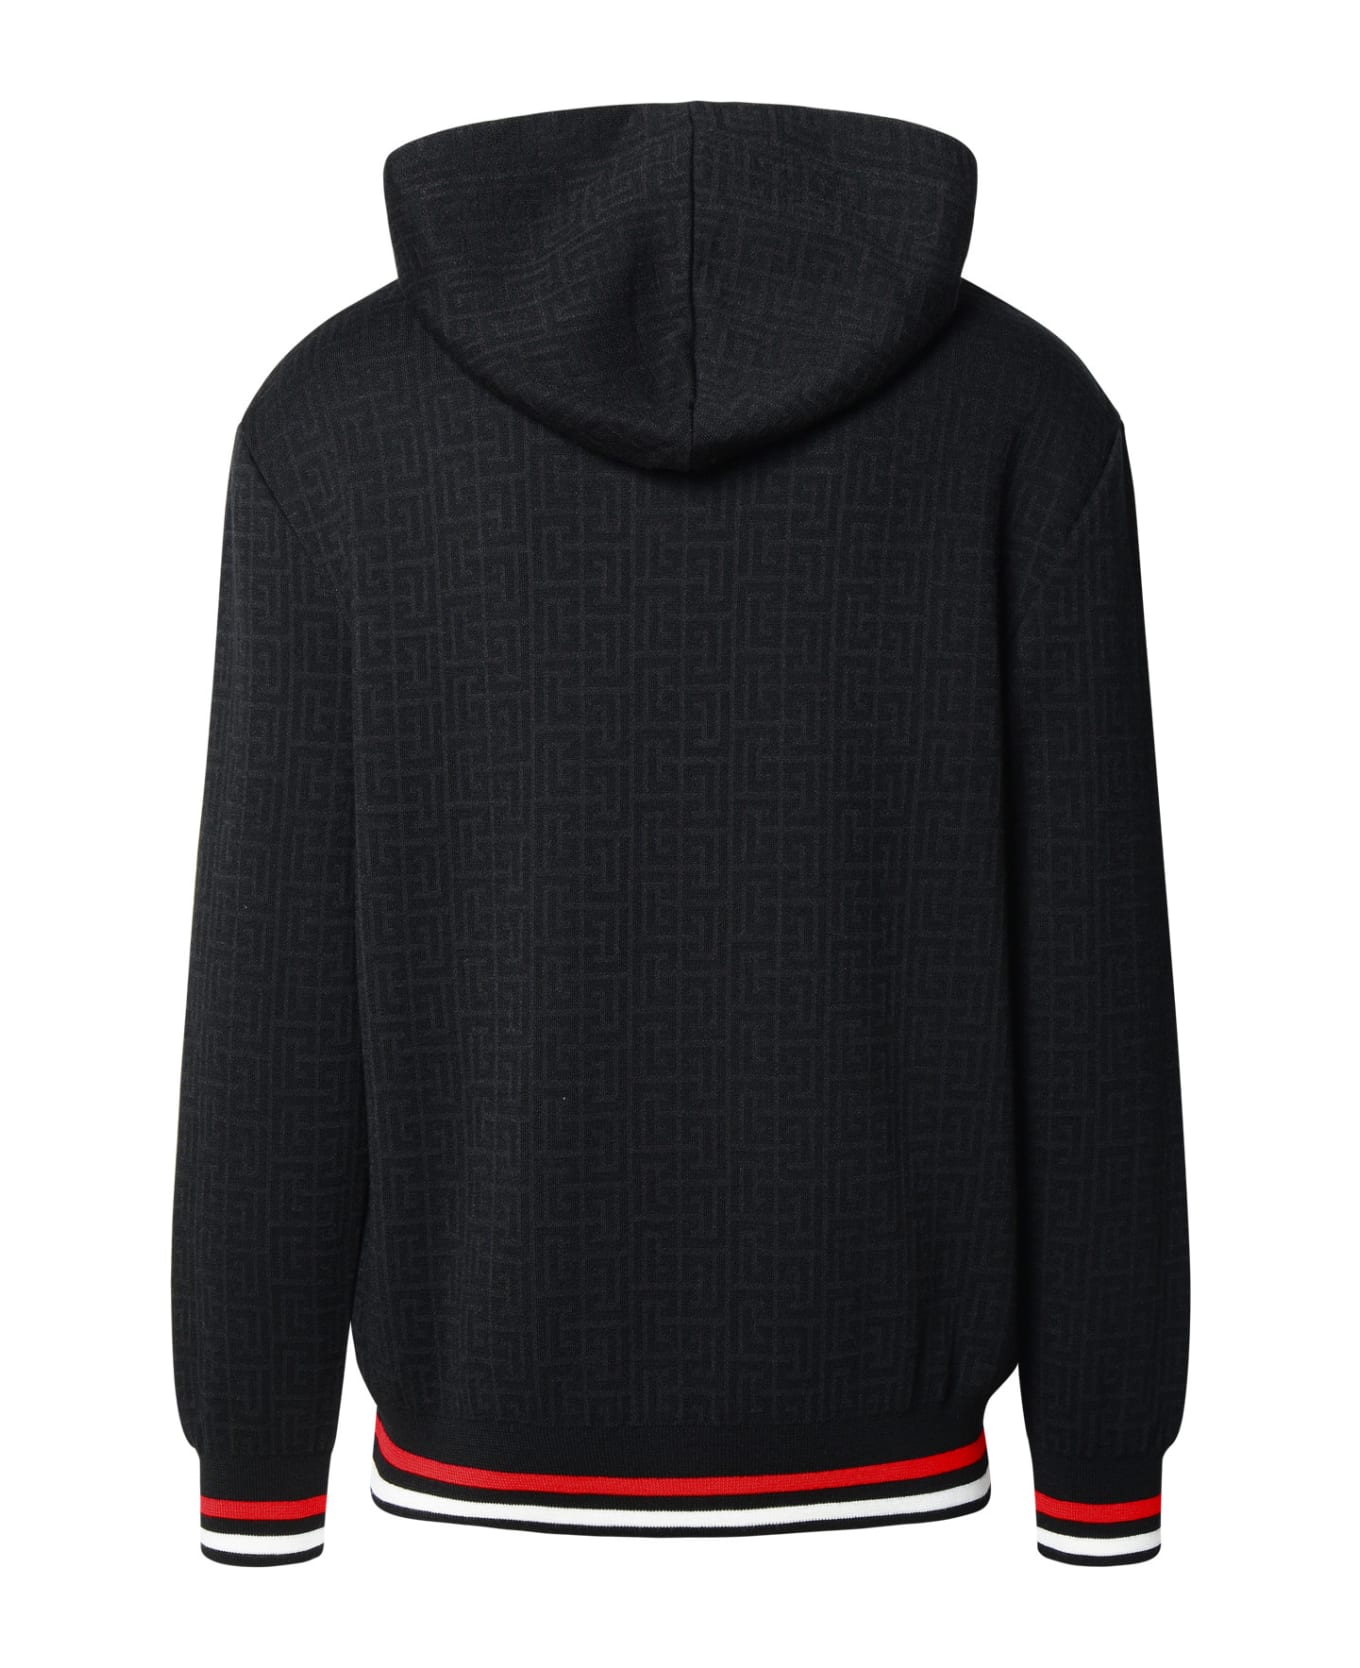 Balmain Black Merino Wool Blend Sweater - Black